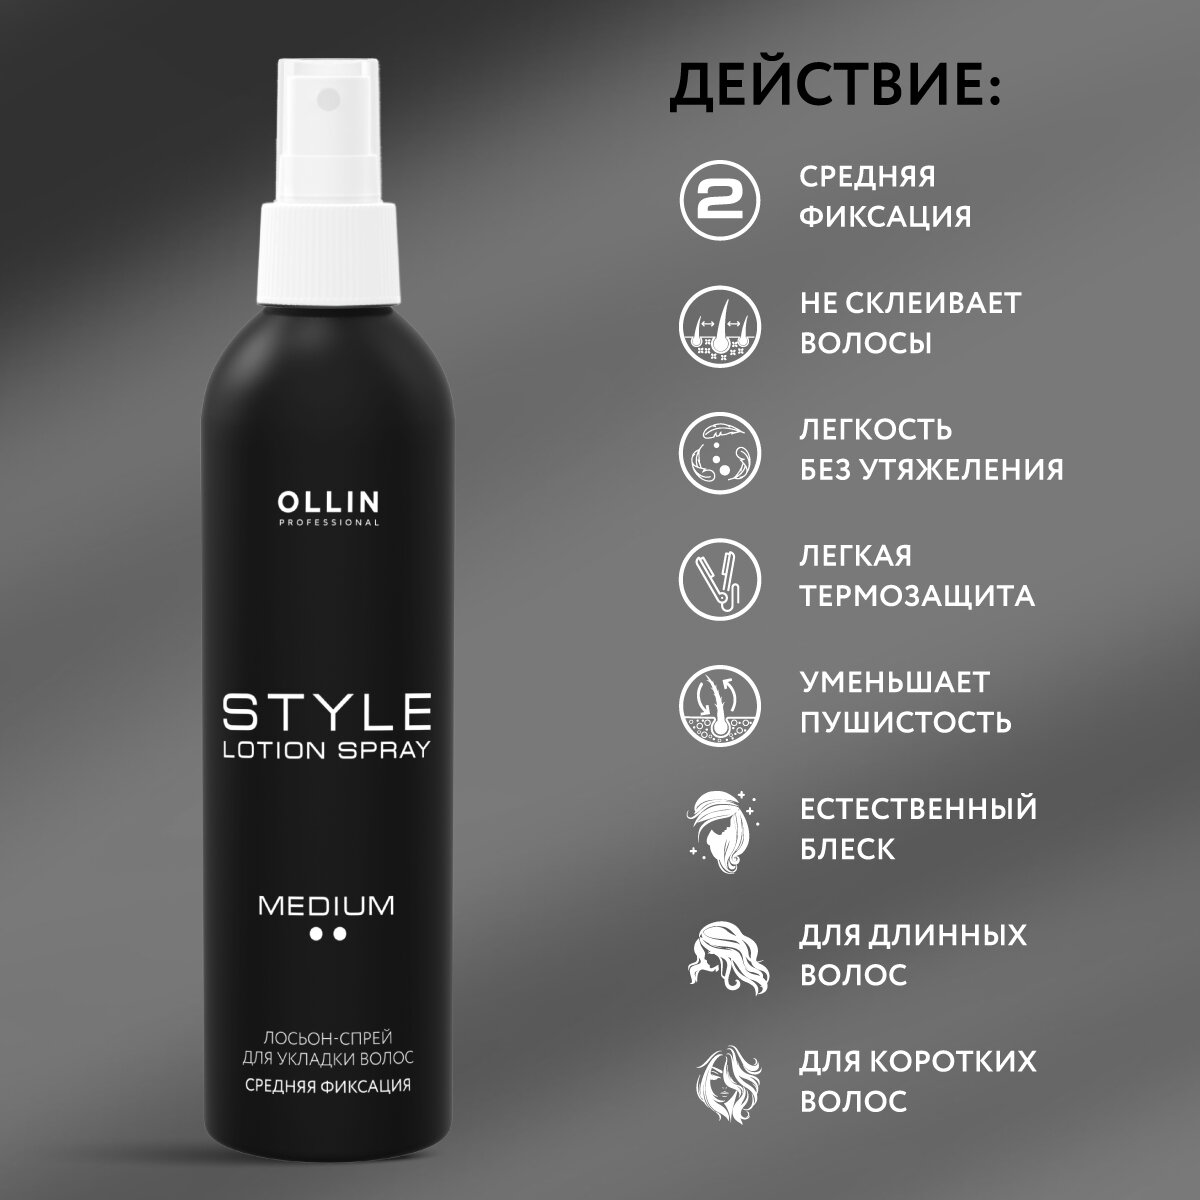 Ollin Professional Lotion-Spray Medium Лосьон-спрей для укладки волос средней фиксации 250 мл (Ollin Professional, ) - фото №7